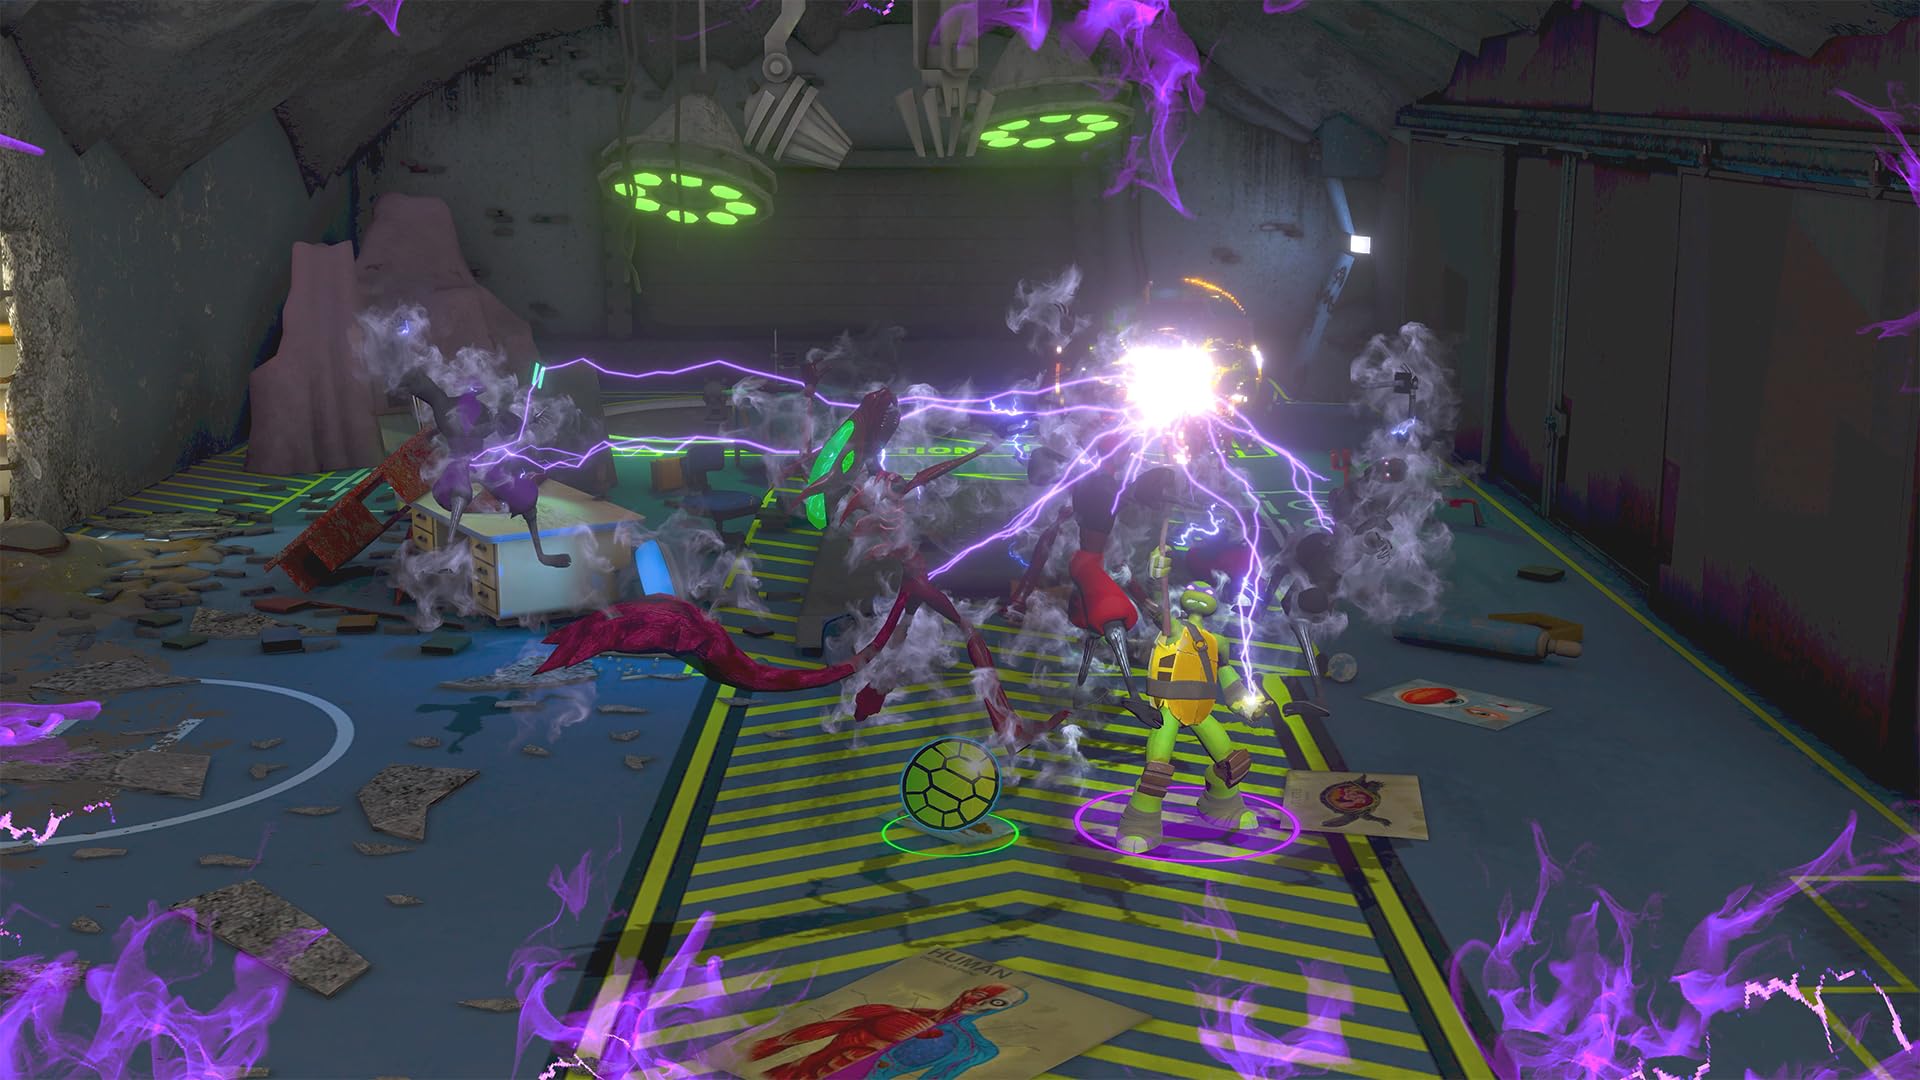 Teenage Mutant Ninja Turtles Arcade: Wrath of the Mutants - (PS5) PlayStation 5 Video Games Game Mill   